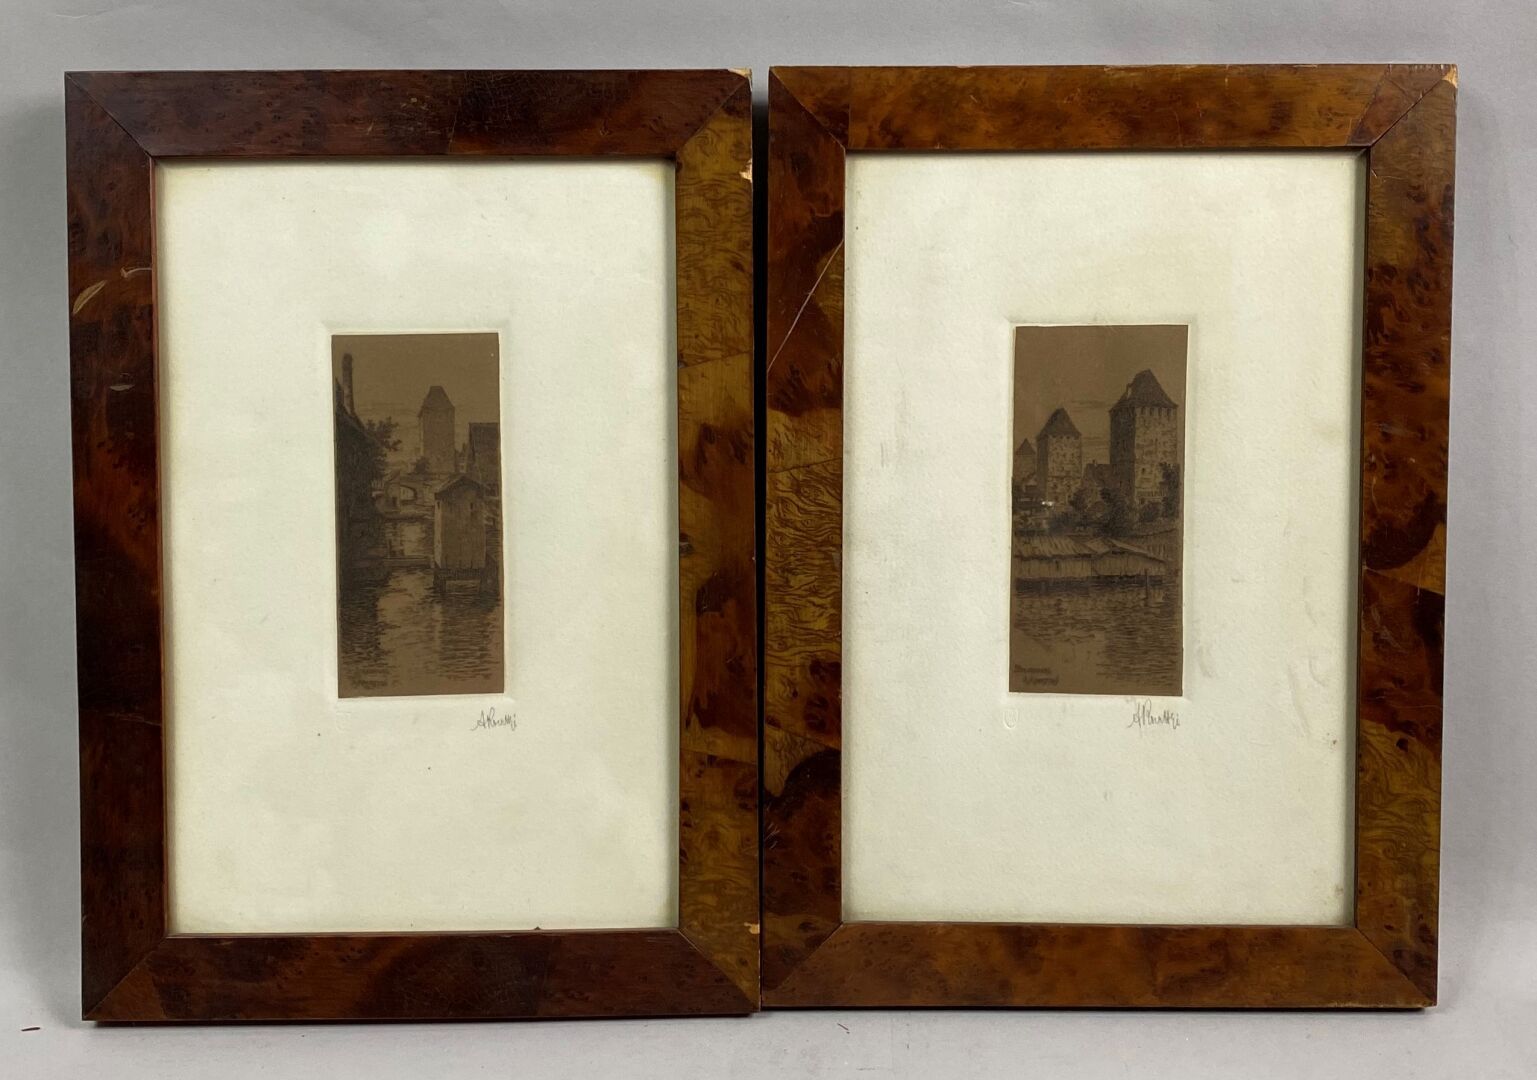 Null KOERTTGE Albert (1861-1940)

Strasburgo

Due piccole incisioni su carta mar&hellip;